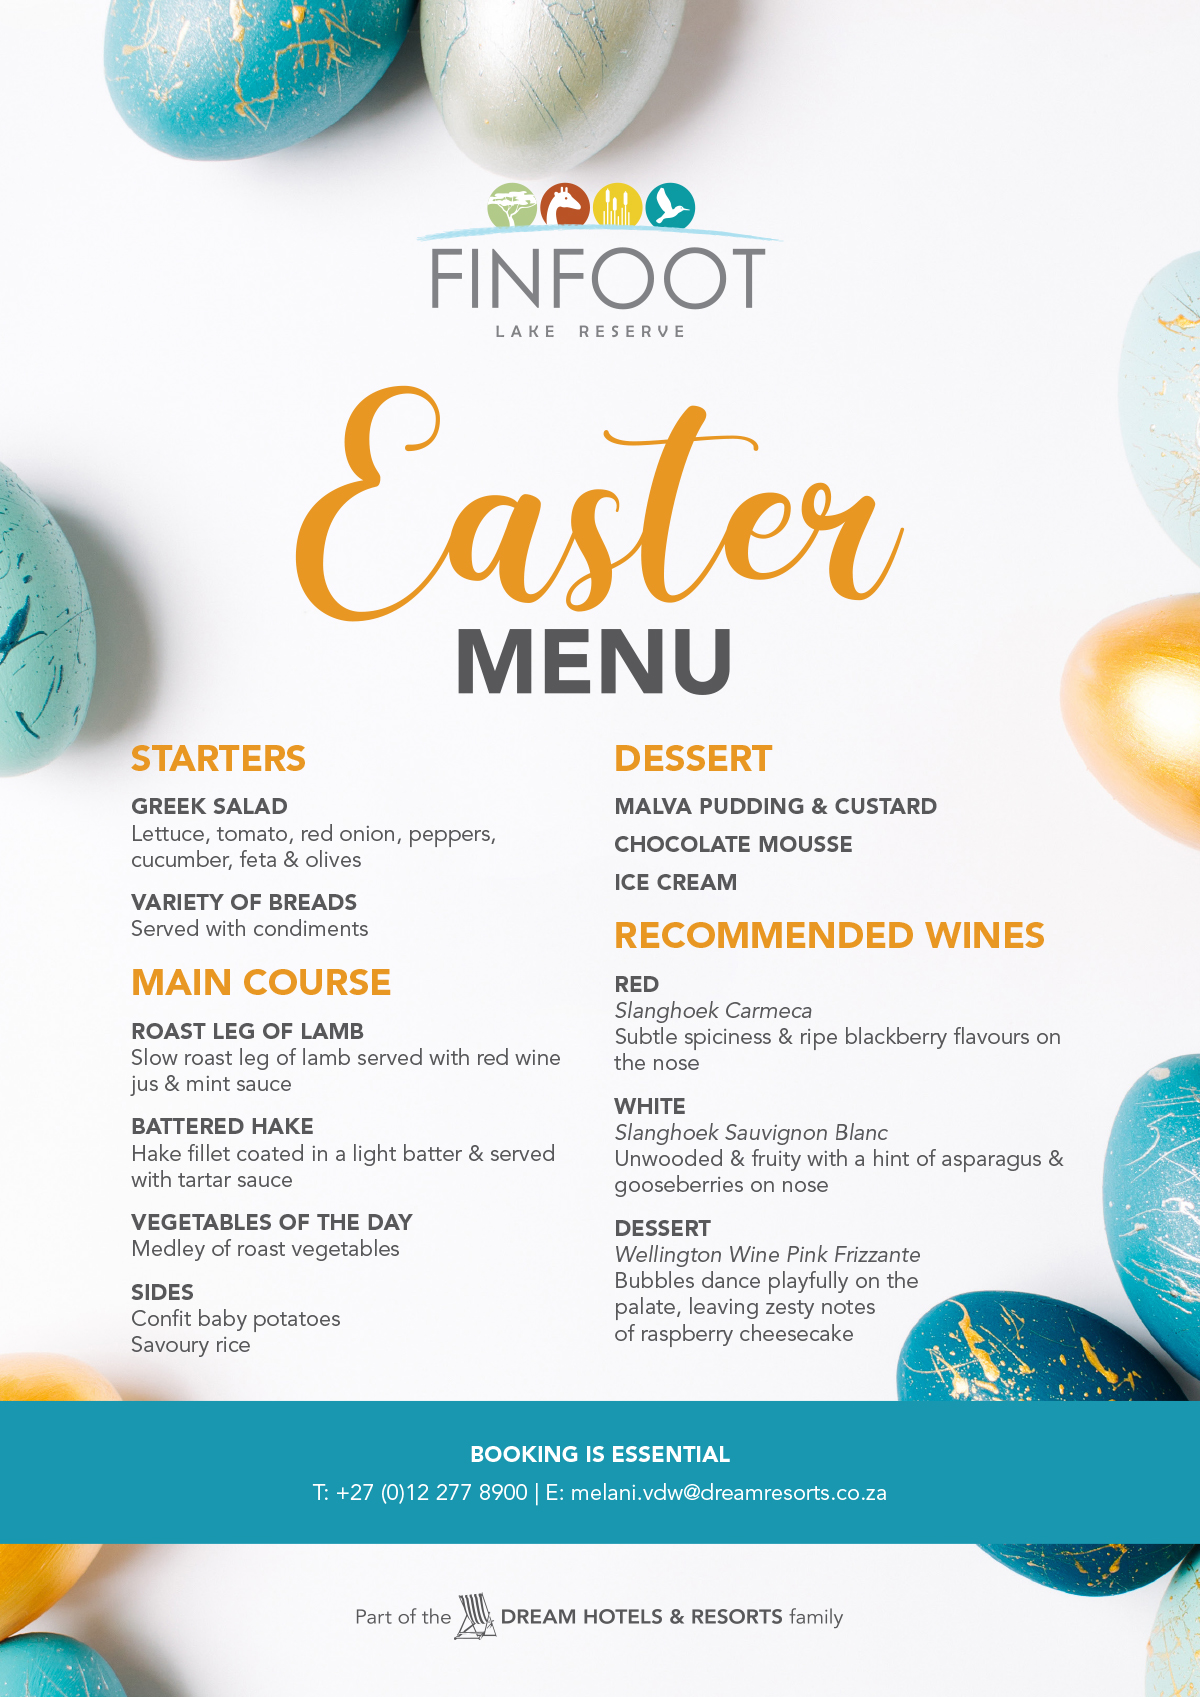 Finfoot Lake Reserve menu